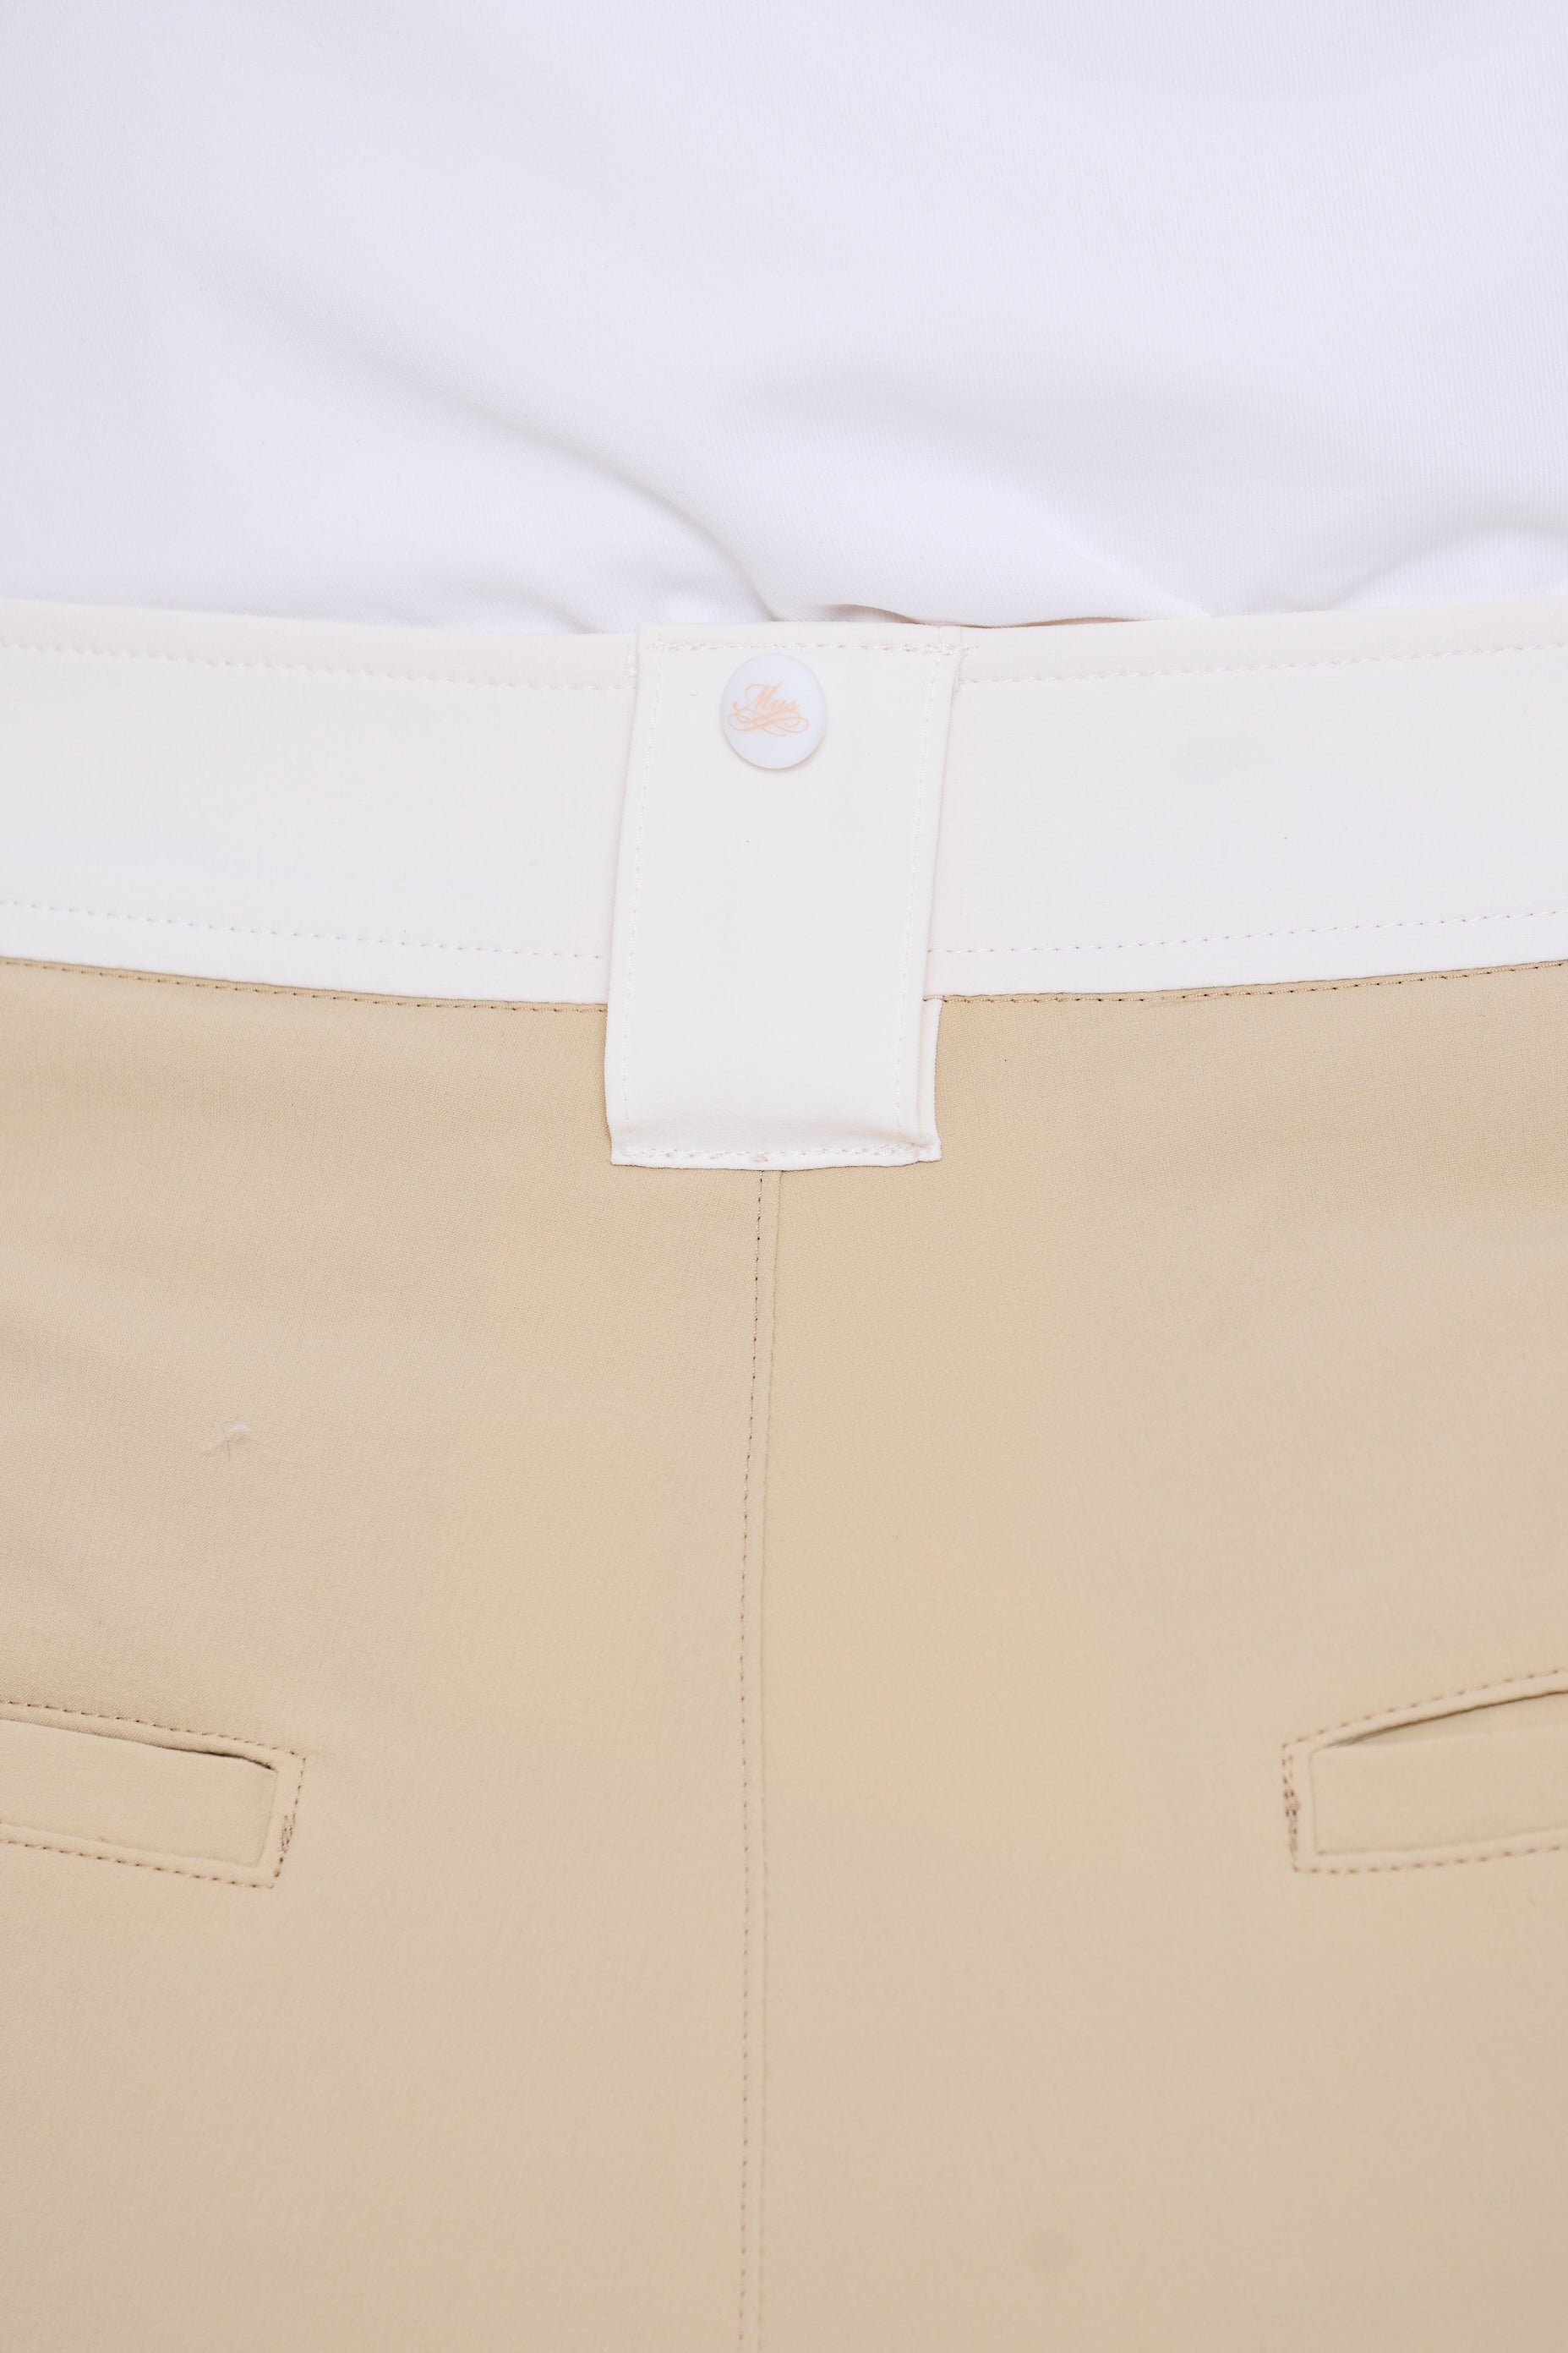 Front wrap shorts (801H2556)